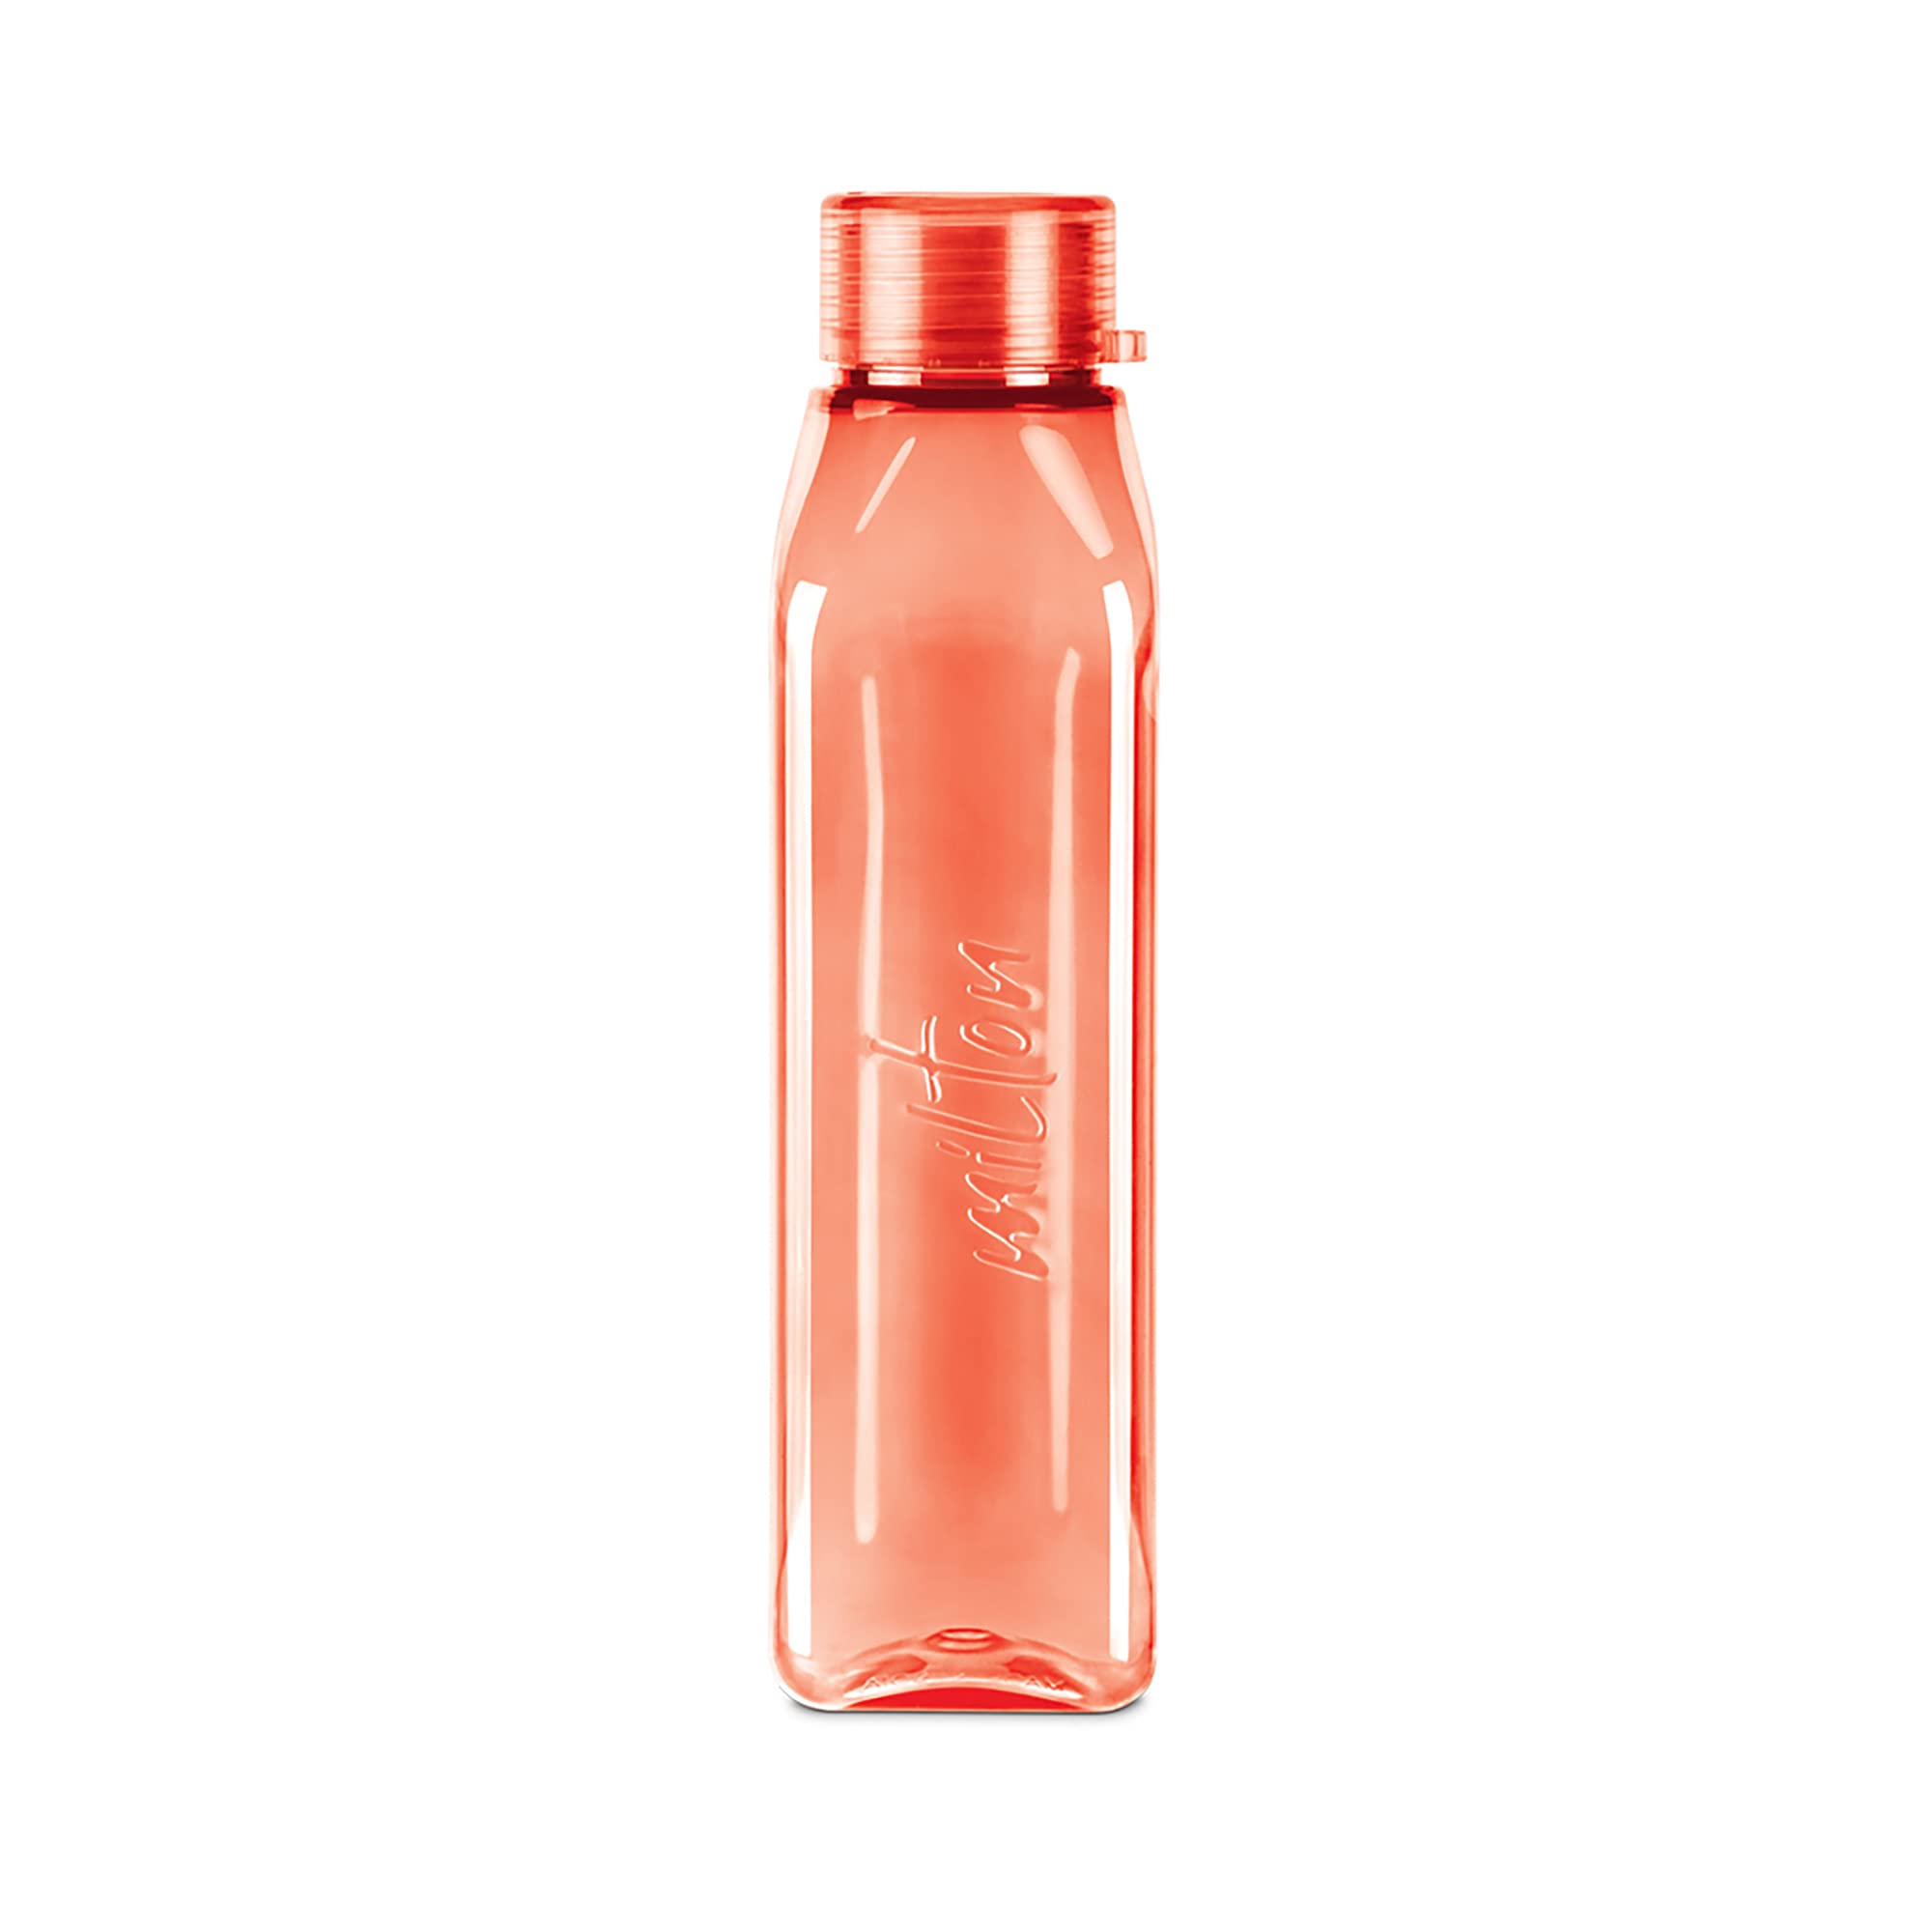 milton plastic water bottle 1 litre price